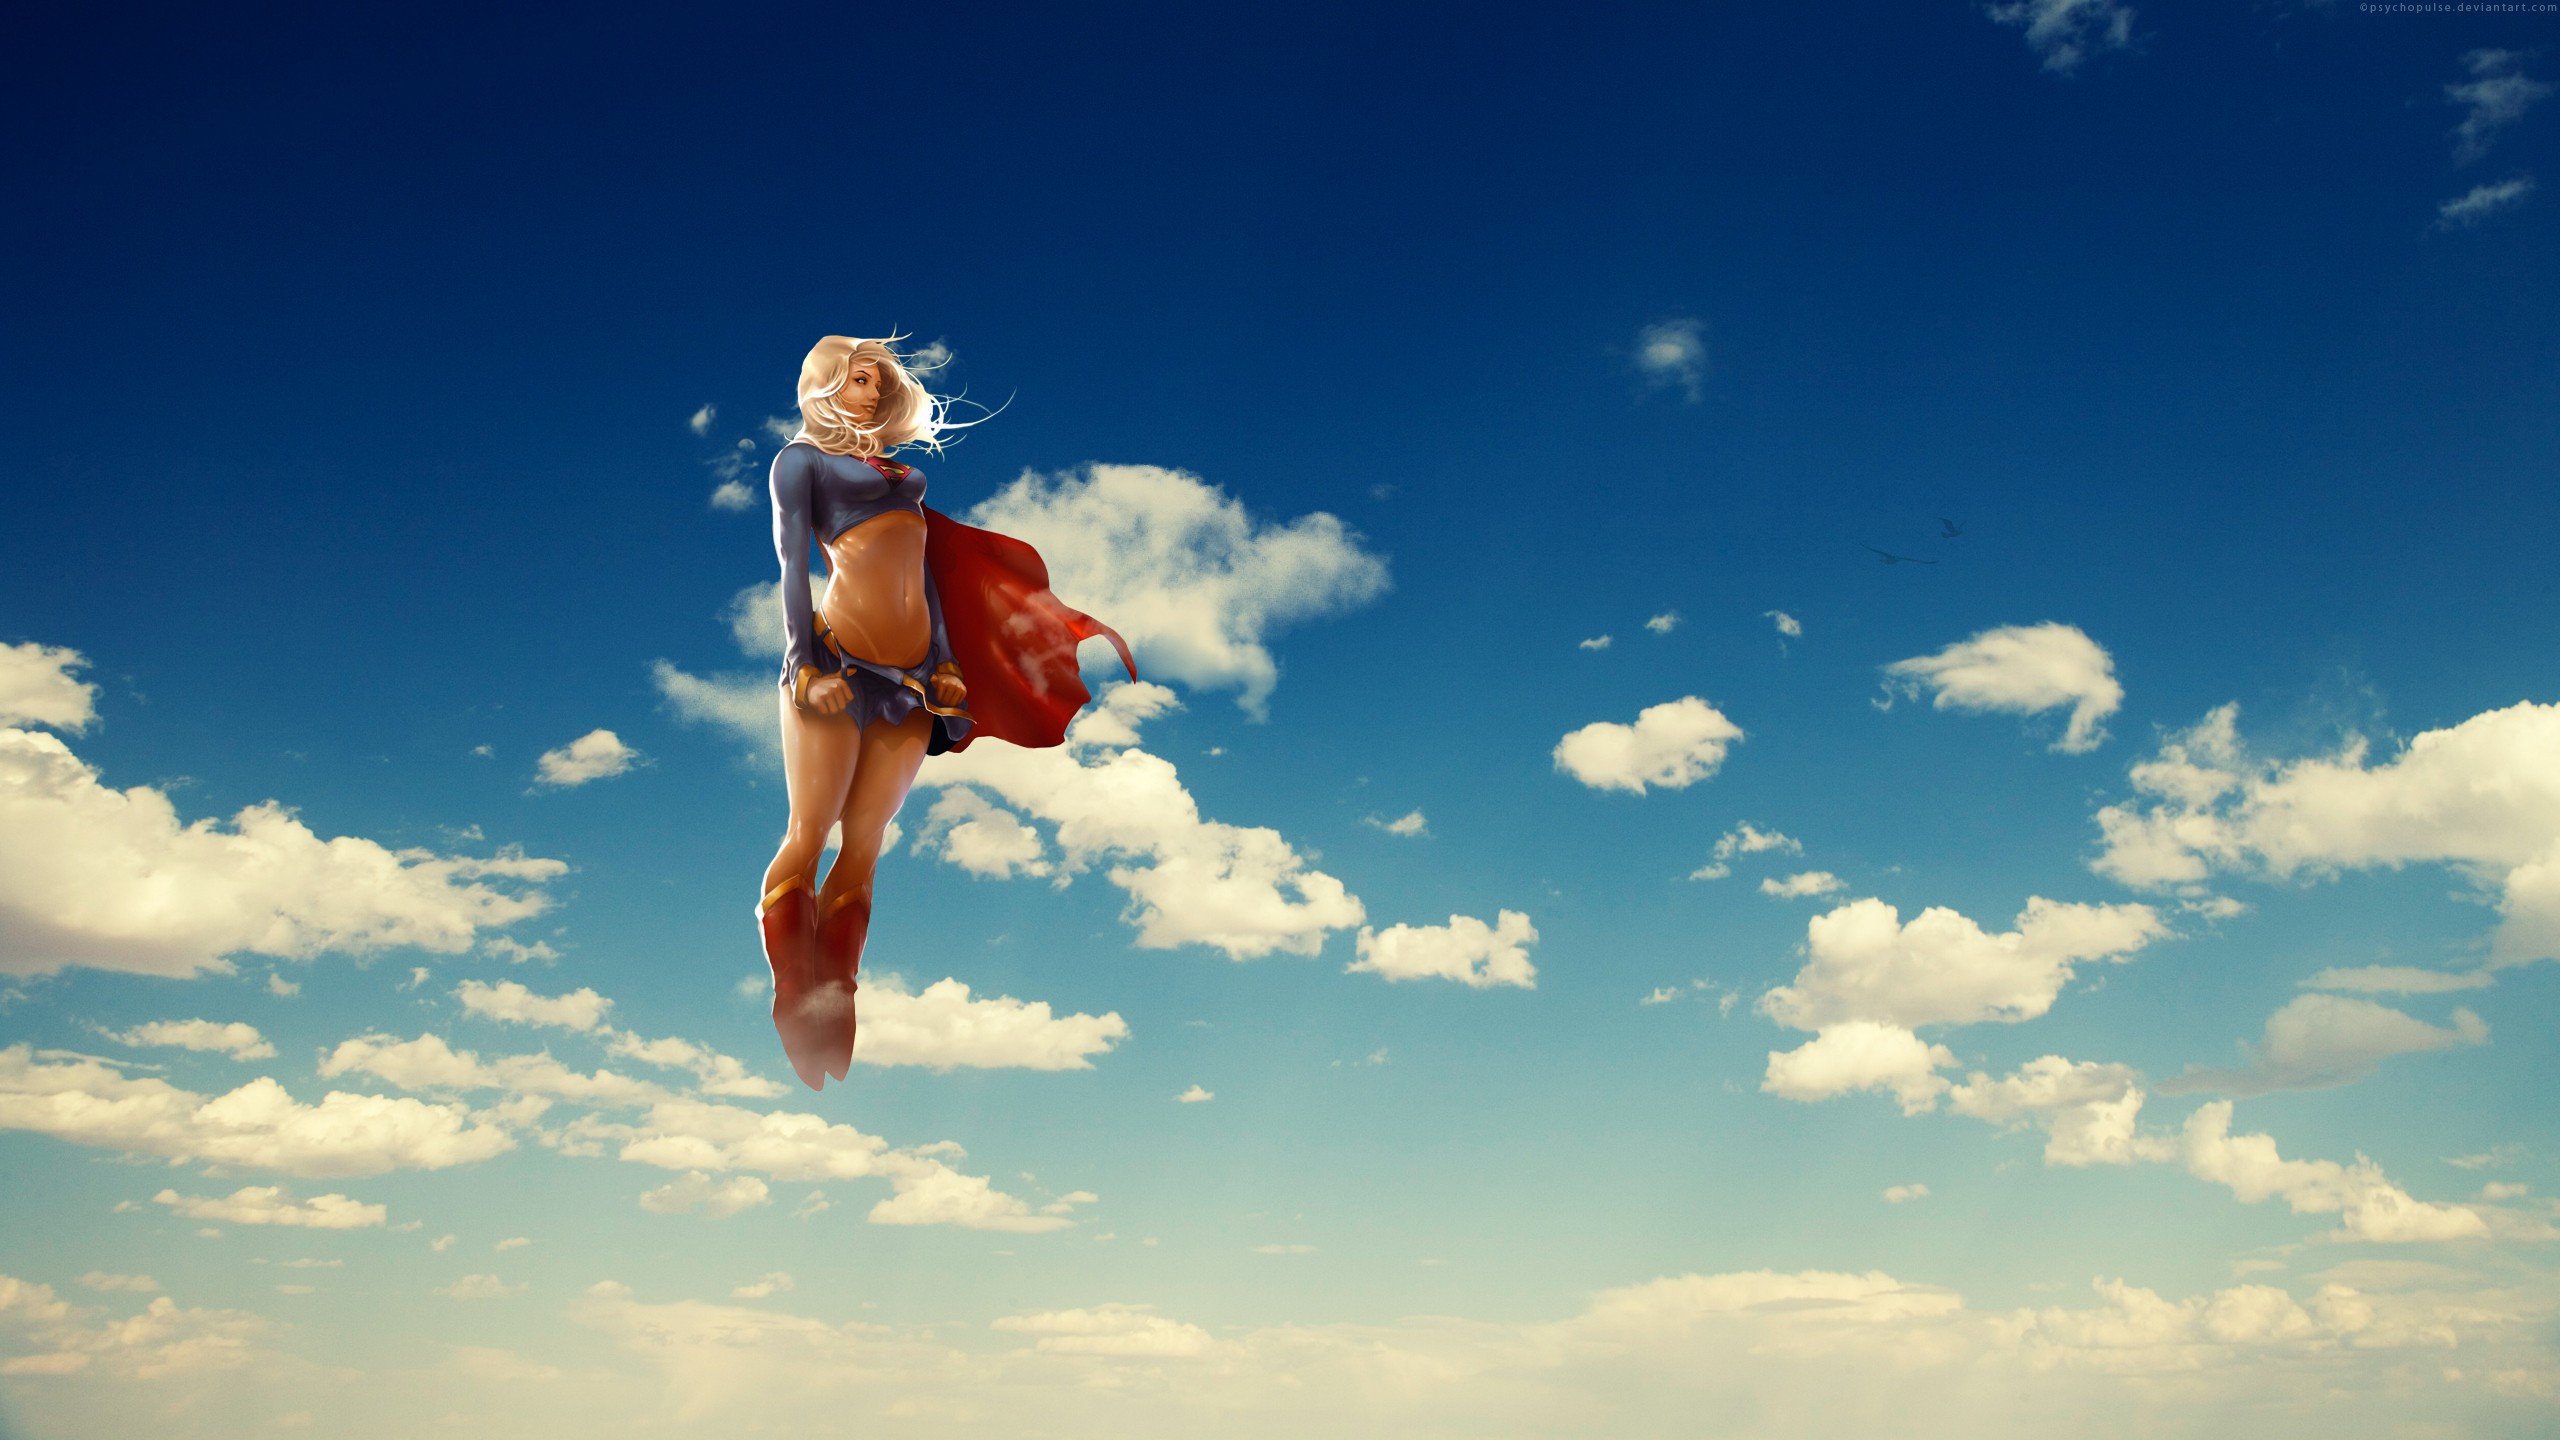 General 2560x1440 Supergirl superheroines artwork blonde fantasy girl flying clouds miniskirt thighs